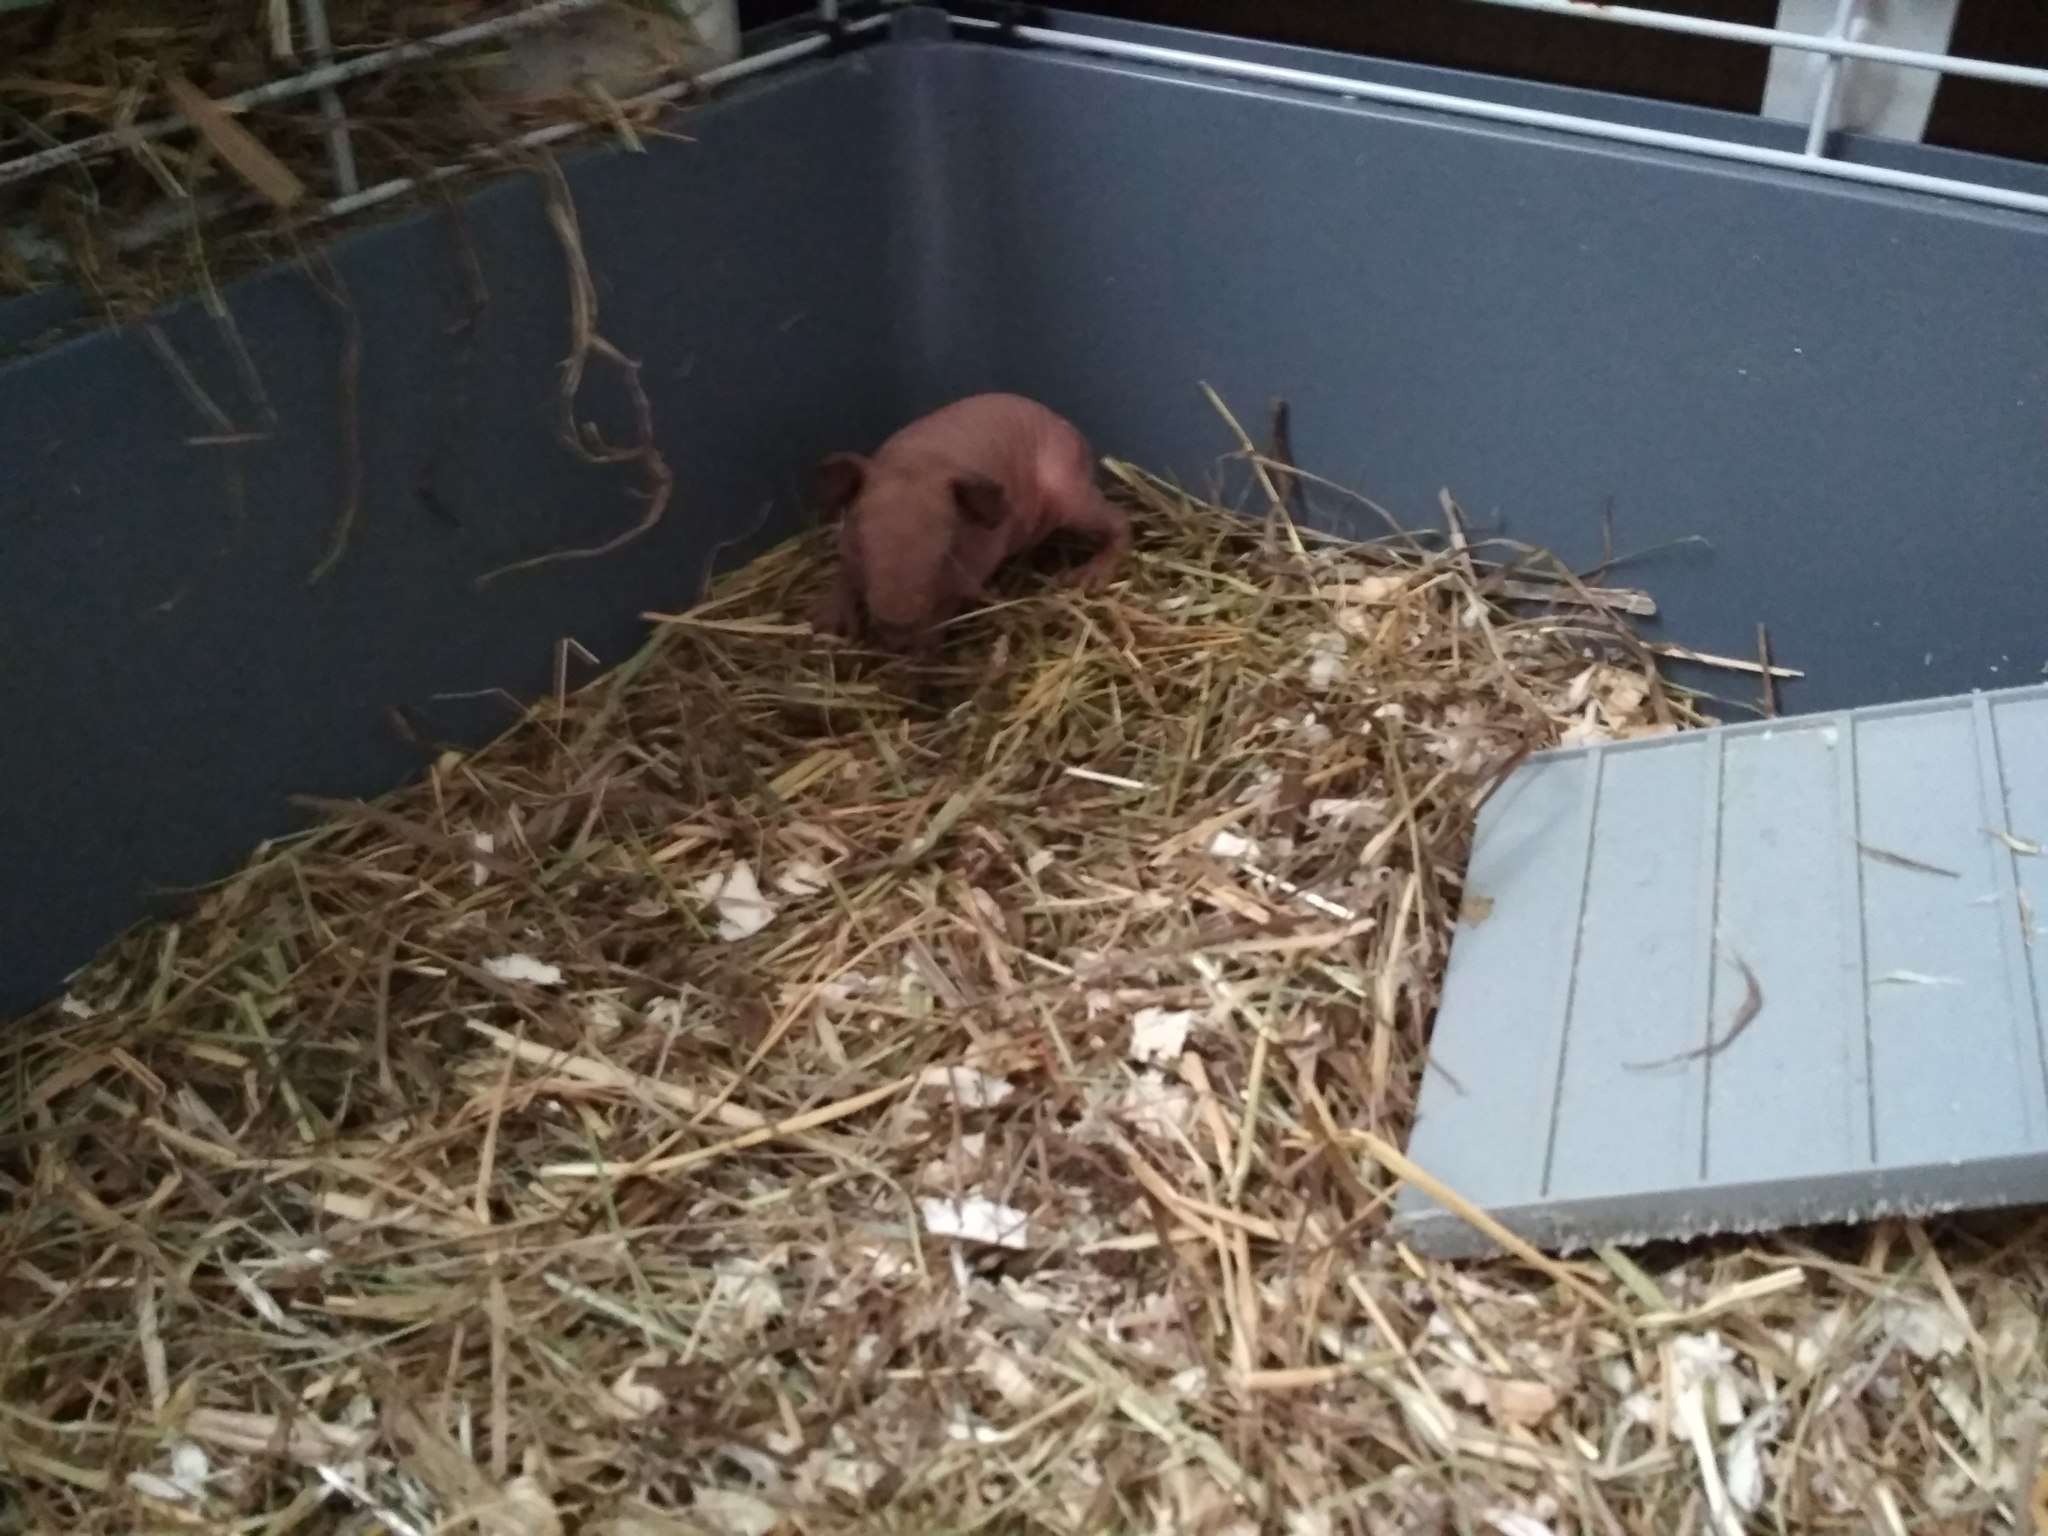 Kinder pig surprise - My, Guinea pig, Surprise